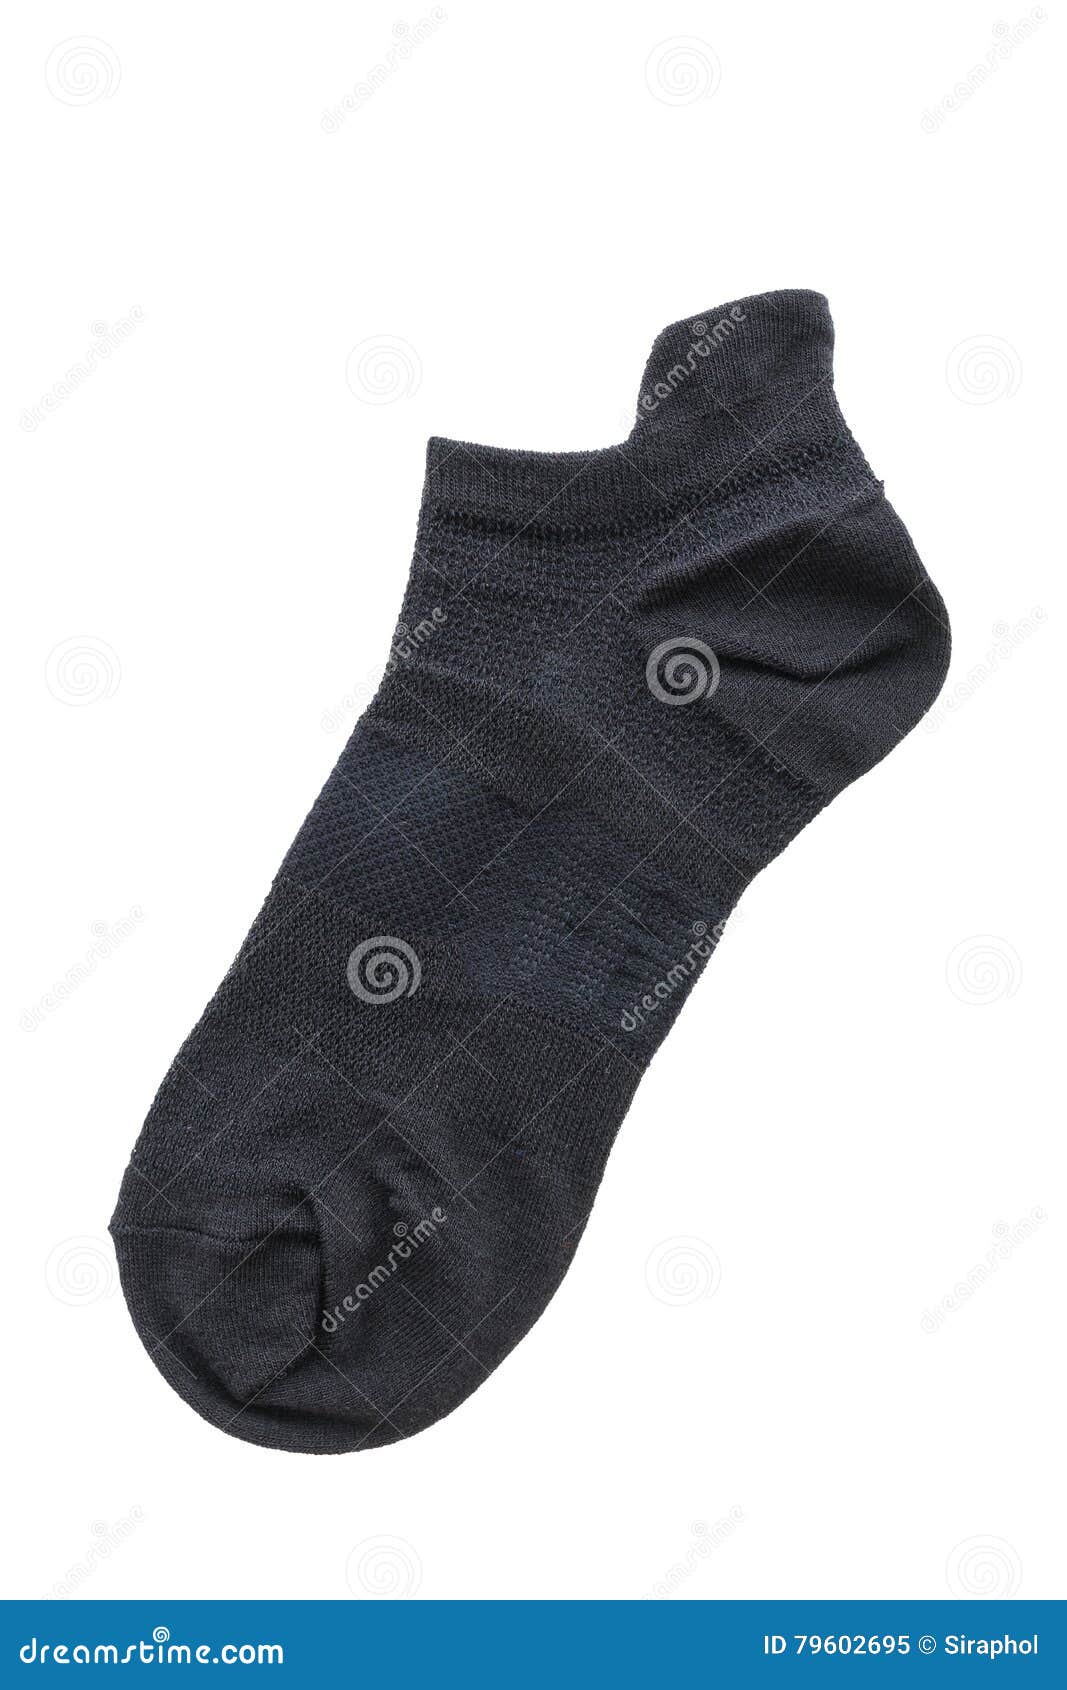 Pair of sock stock image. Image of pair, pattern, fashion - 79602695